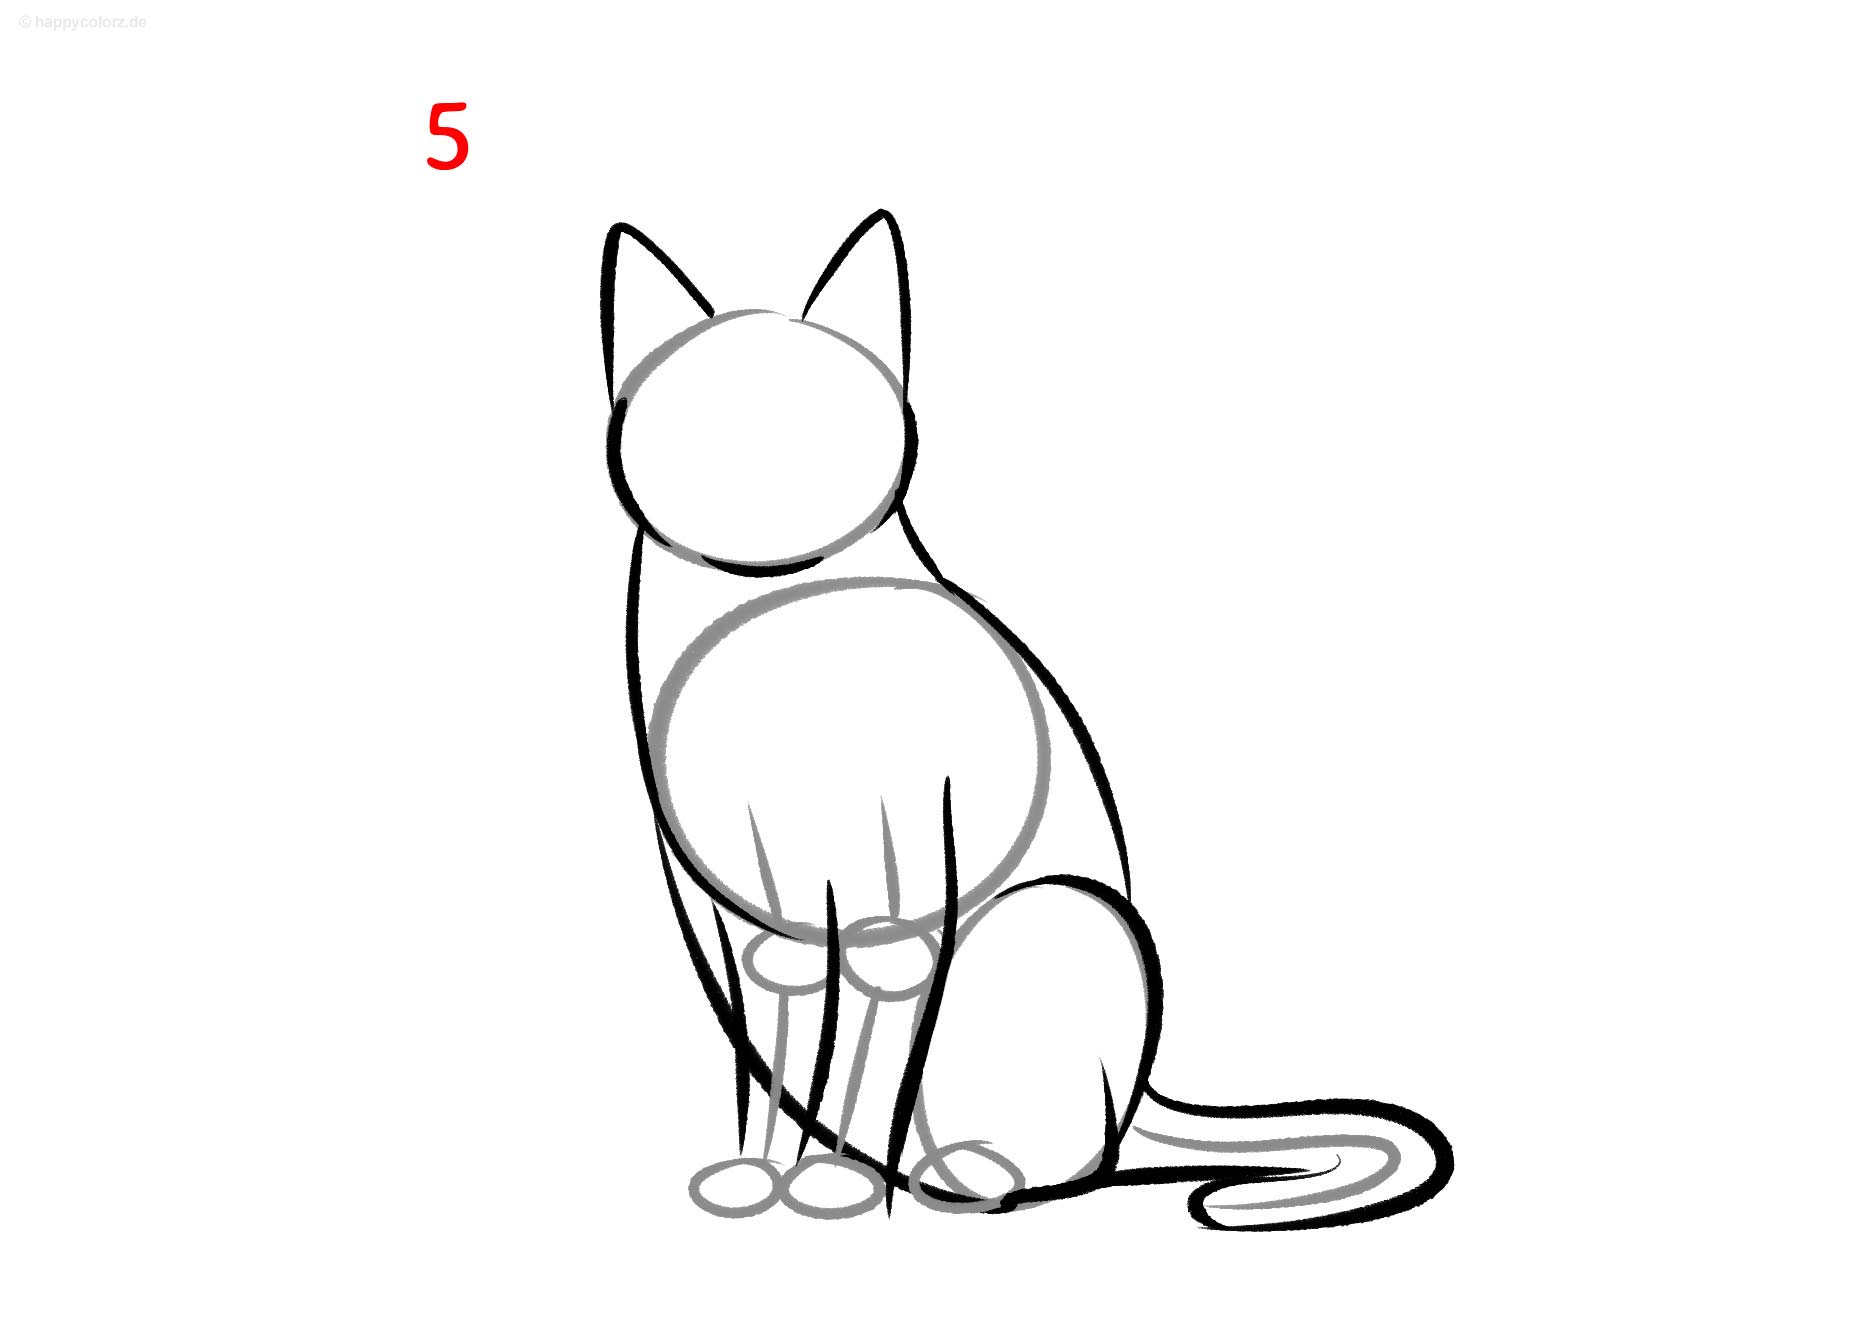 Katze malen - Schritt für Schritt